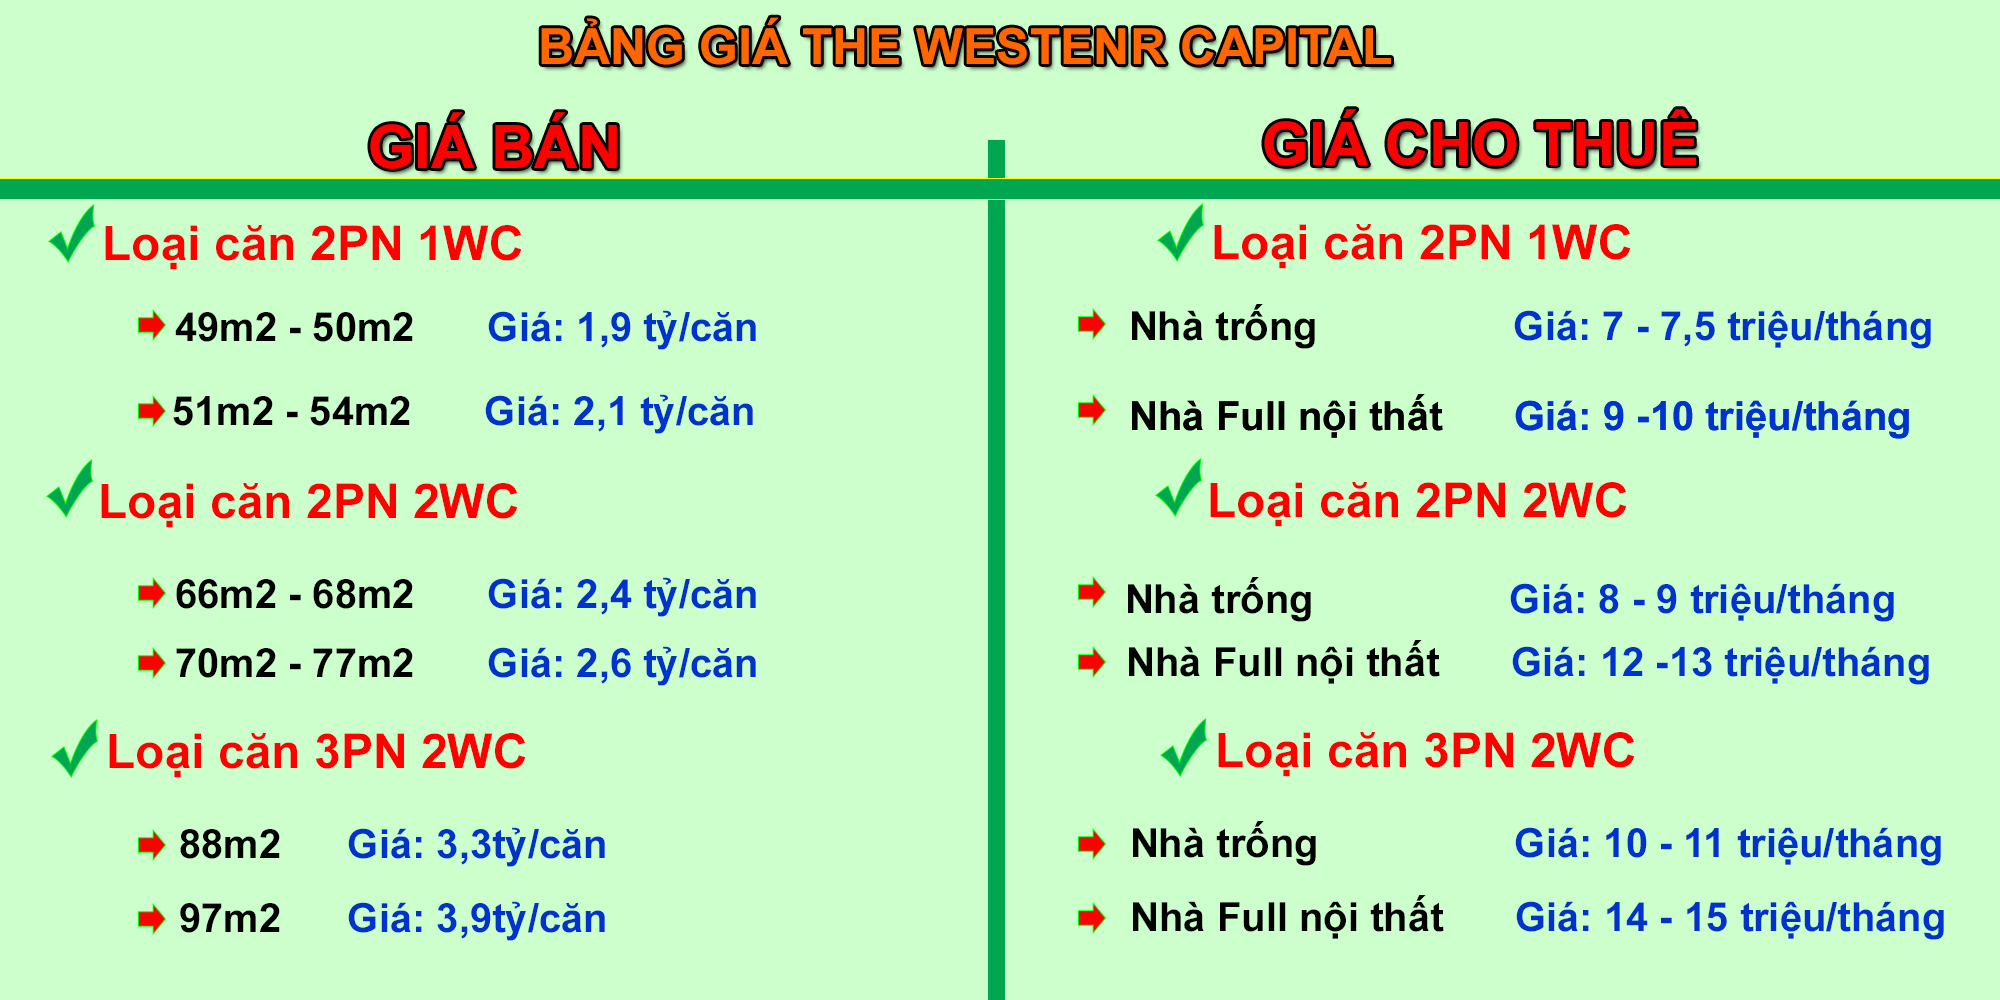 BANG GIA CHUAN